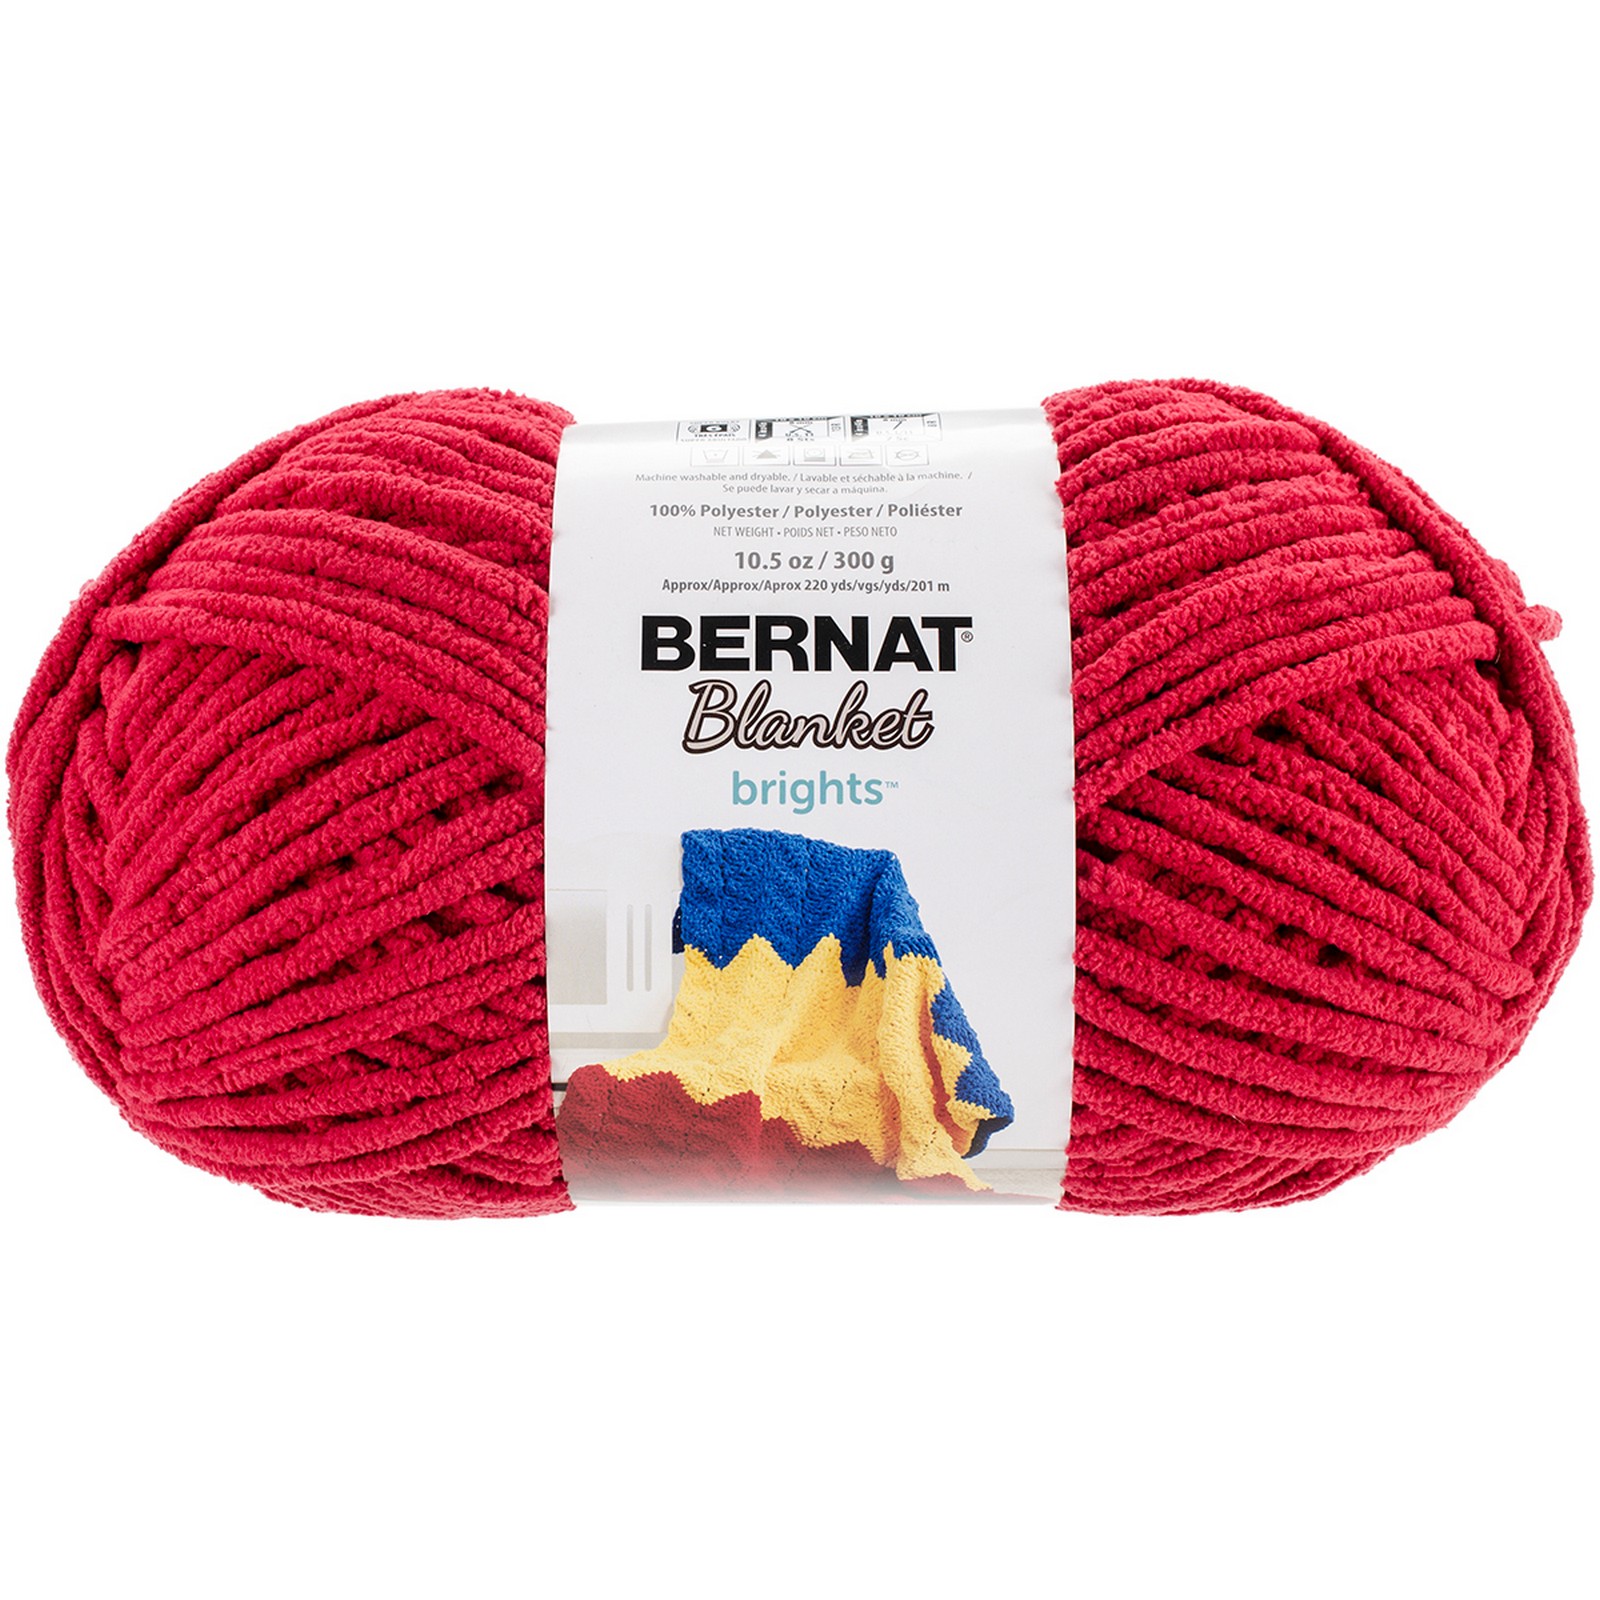 Bernat Blanket Brights Big Ball Yarn Racecar Red